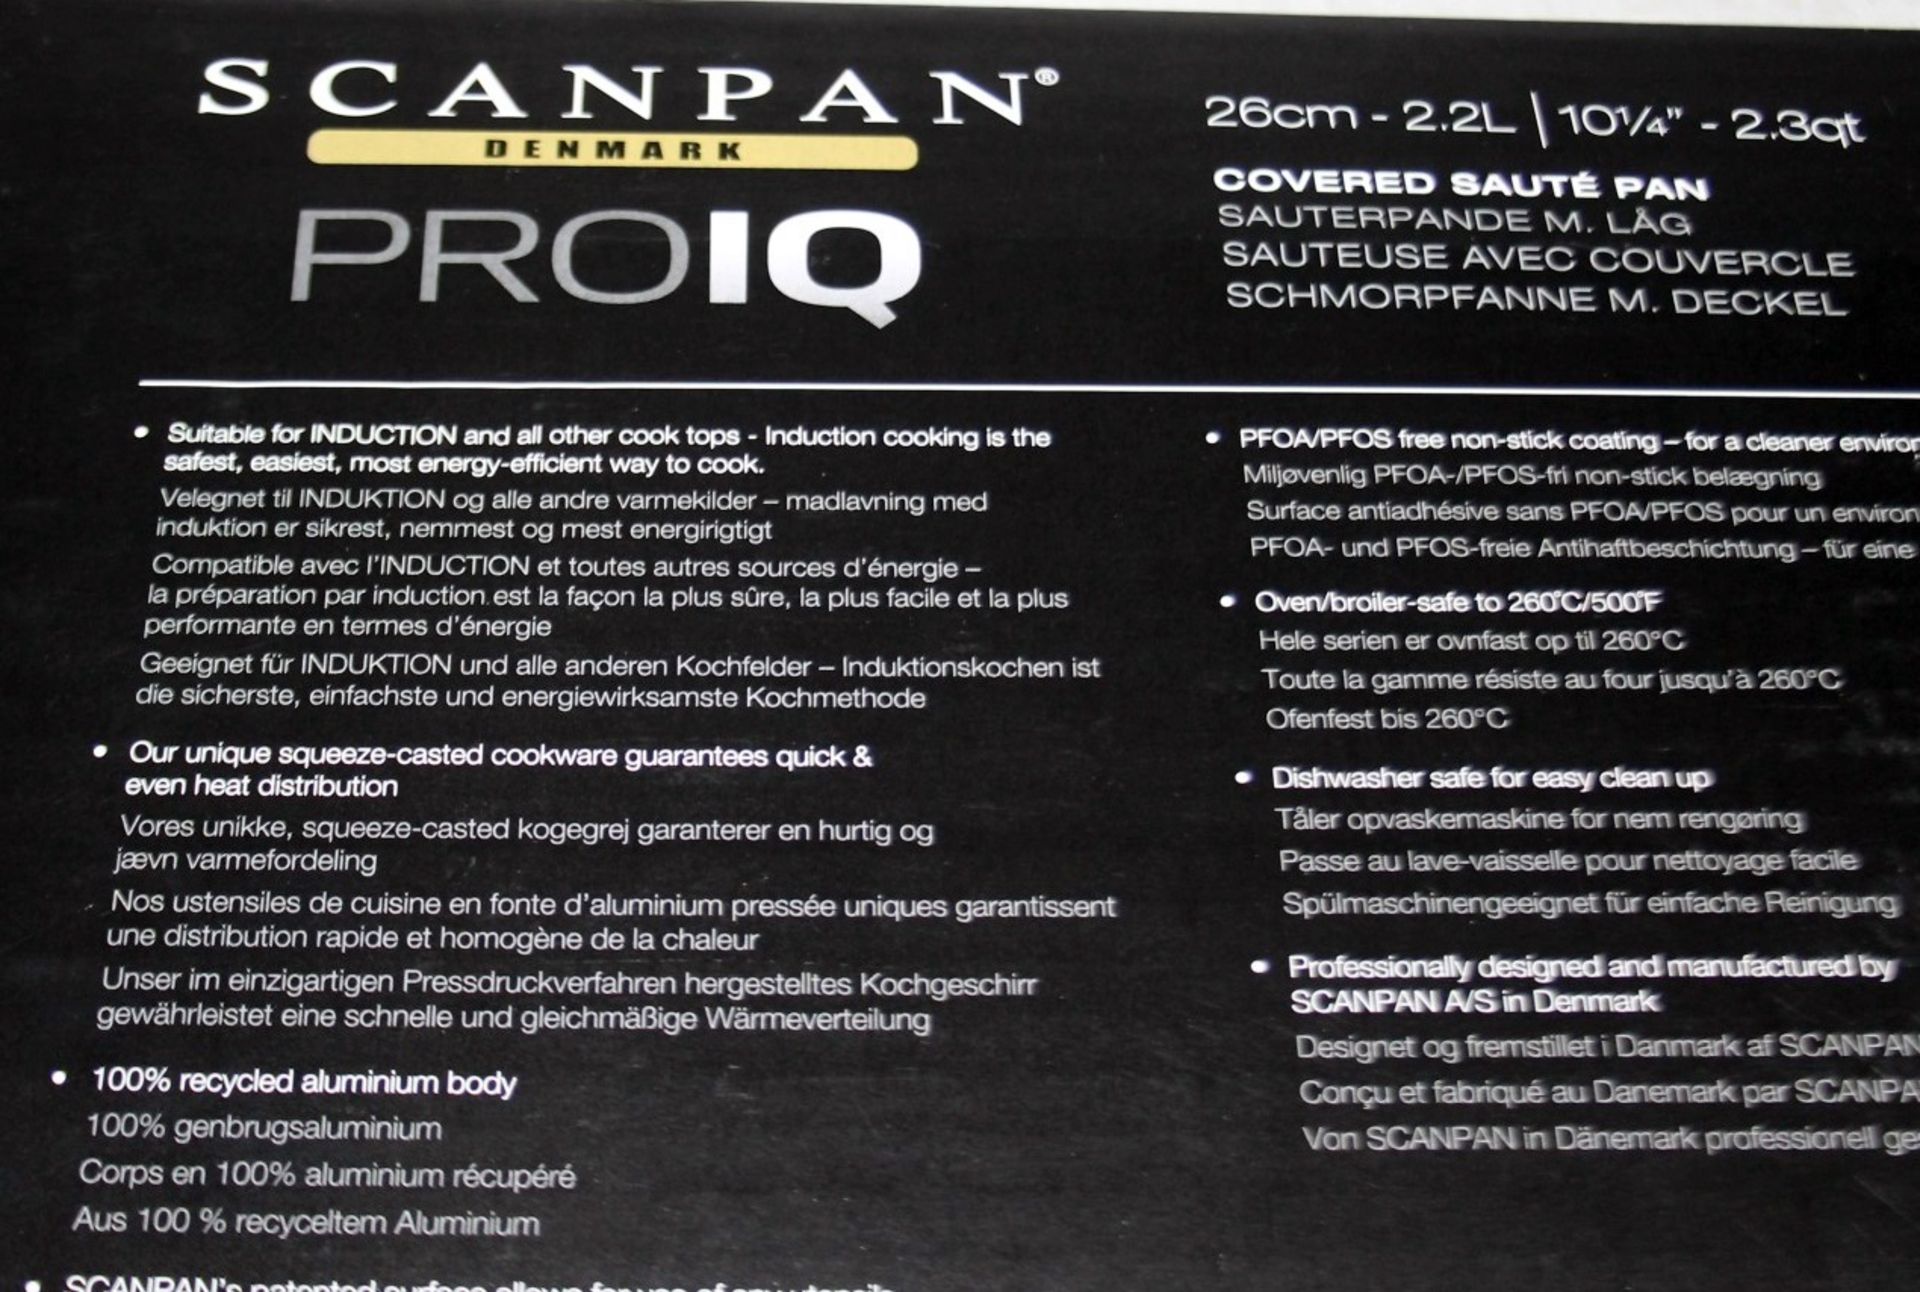 1 x SCANPAN Pro IQ Saute Pan with Lid (26cm) - Original Price £199.00 - Unused Boxed Stock - Ref: - Image 10 of 10